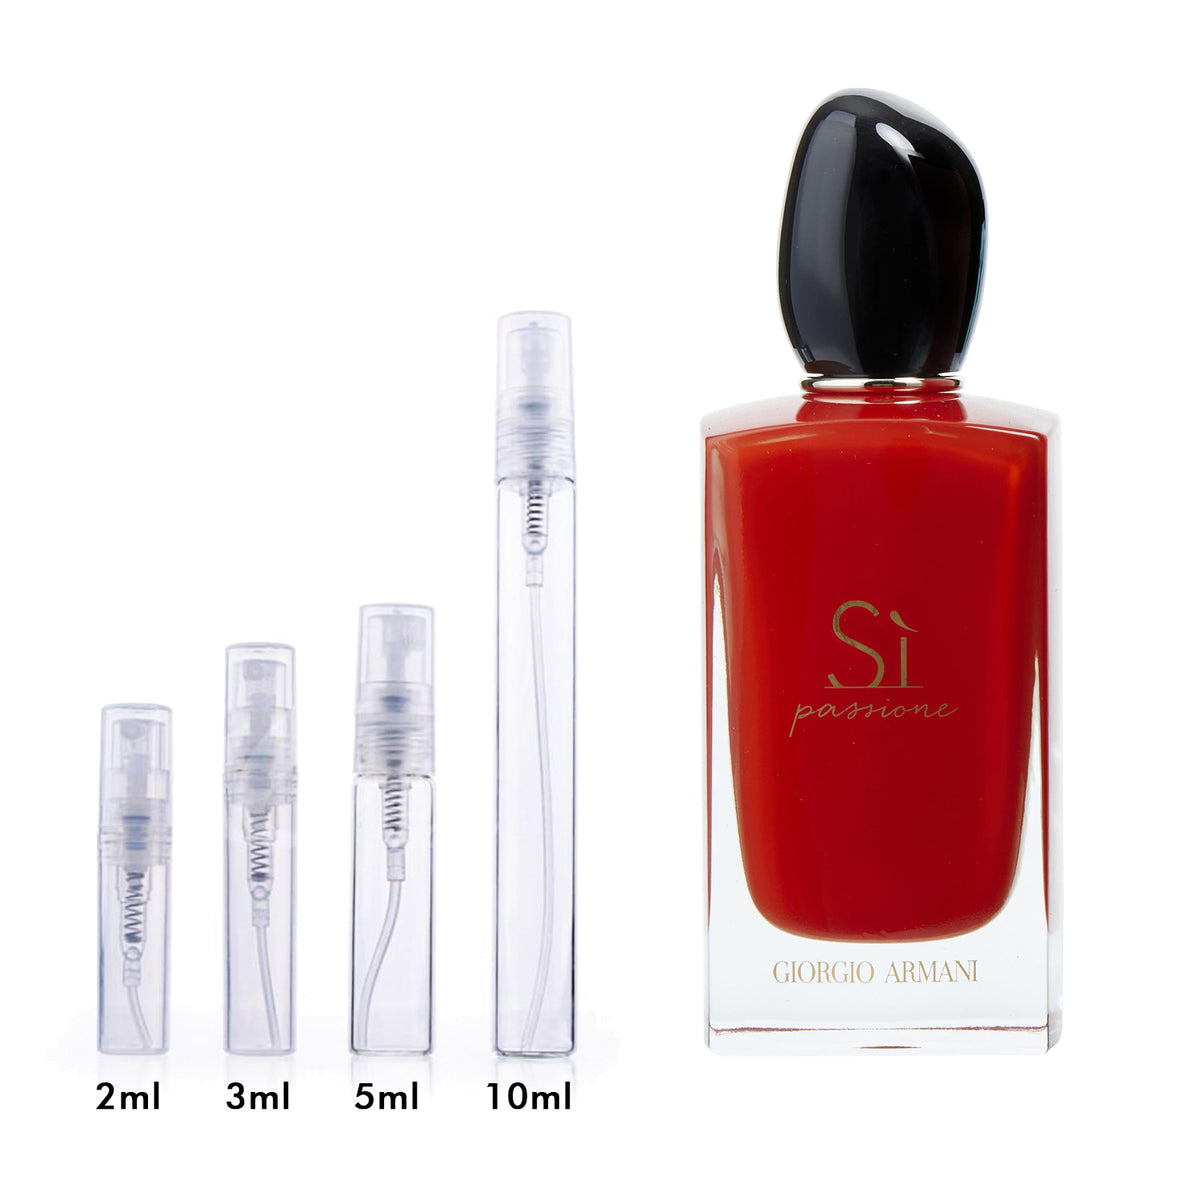 Giorgio Armani Si Eau De Parfum For Women – DecantX Perfume & Cologne Decant Fragrance Samples